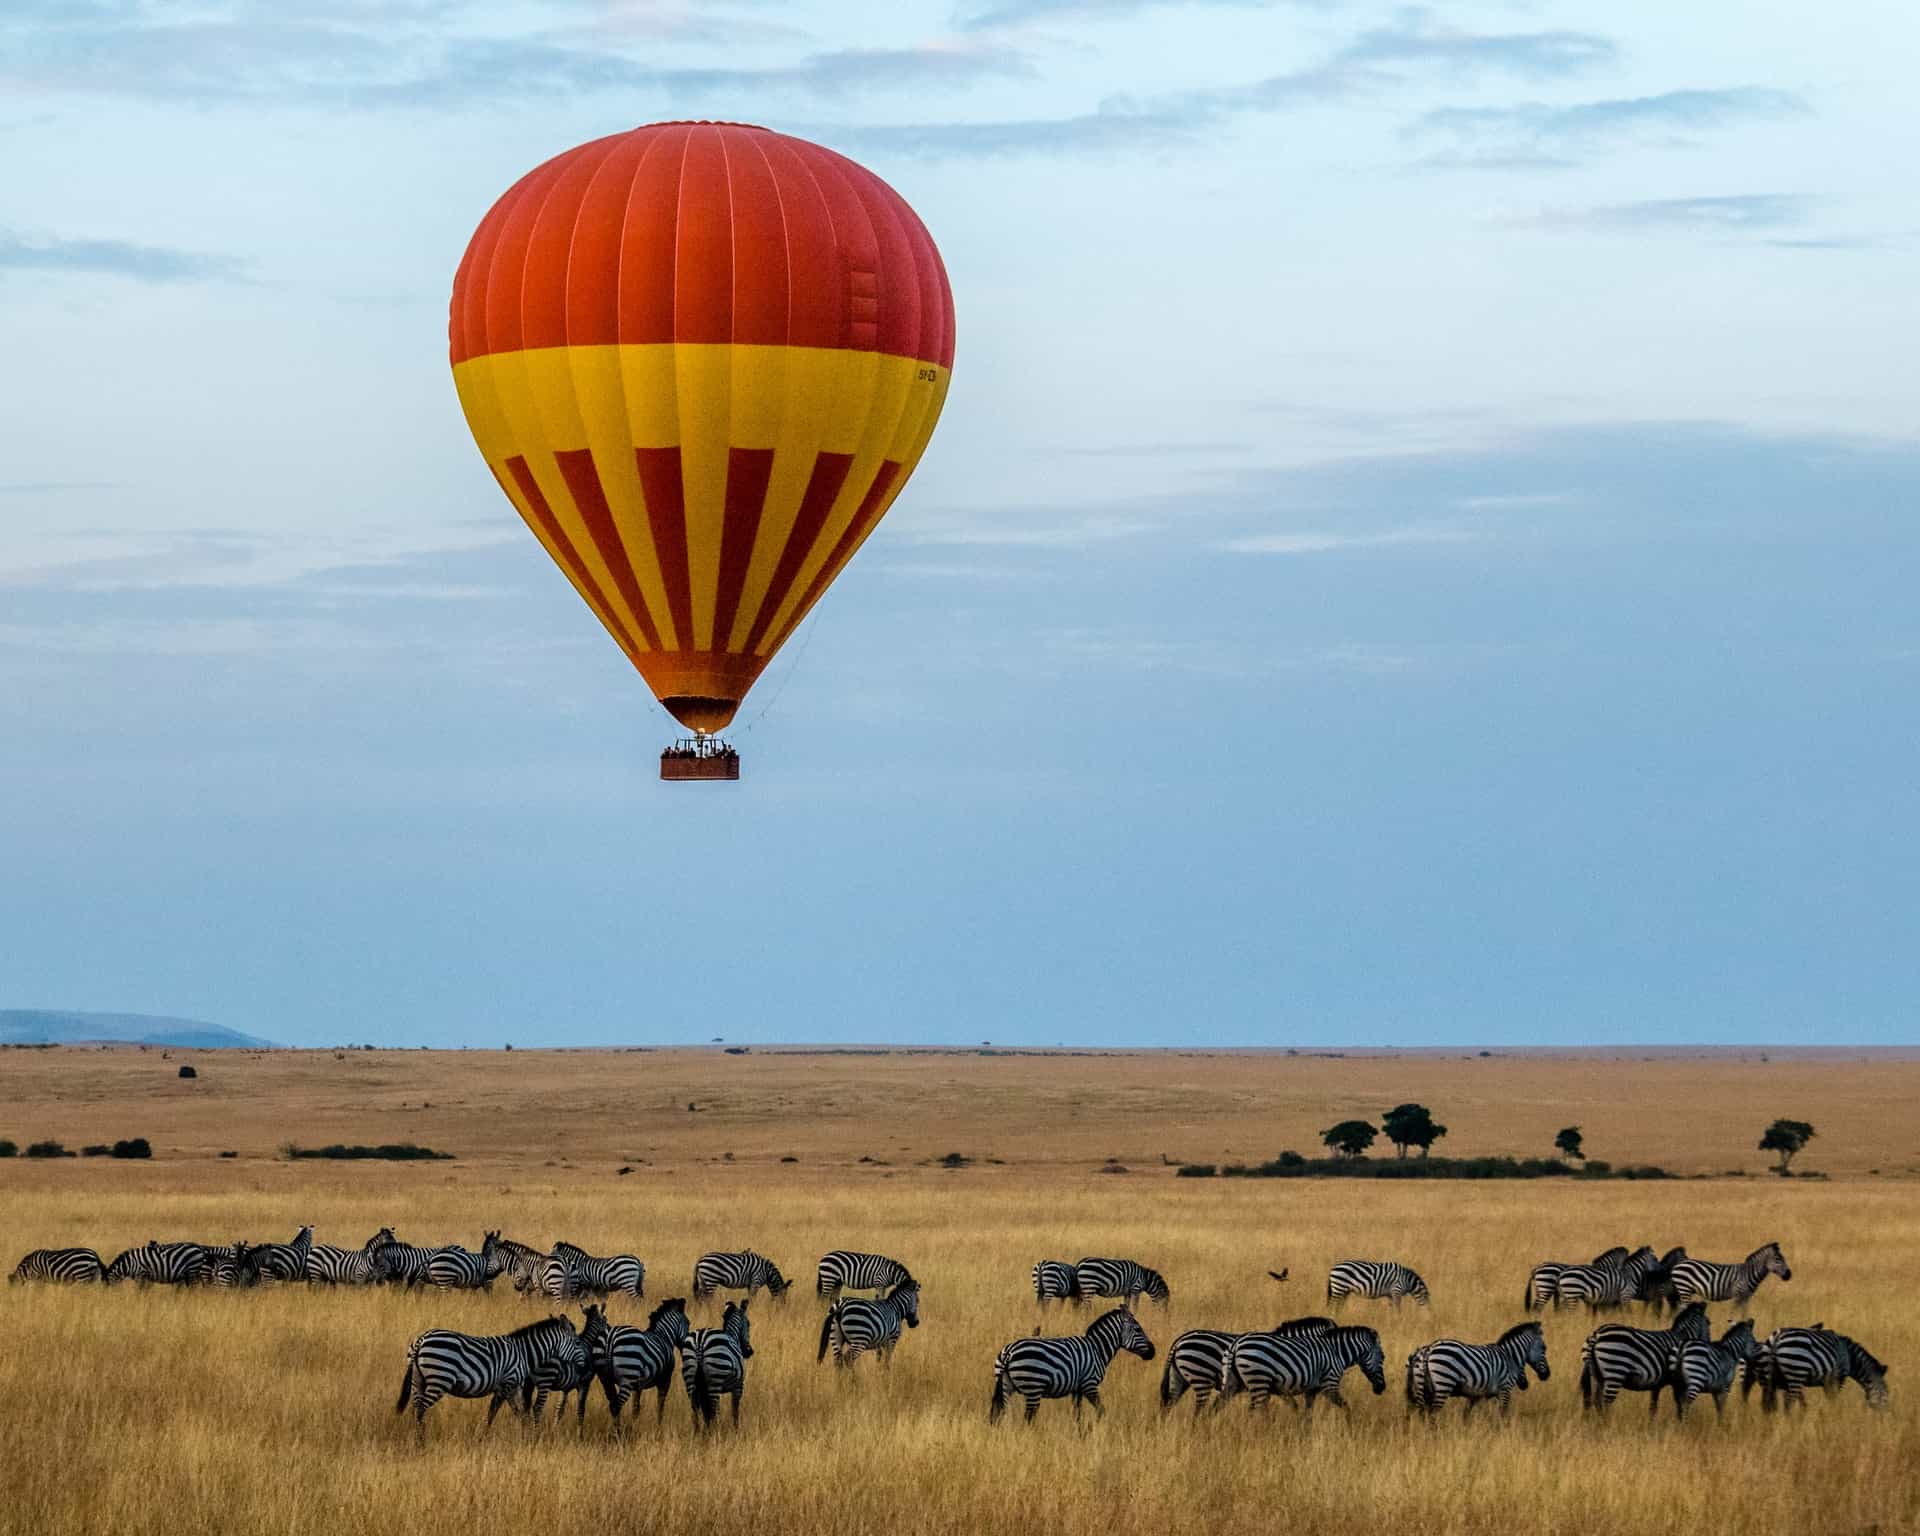 Best things to do in Nairobi Kenya - Robert Belle - Zebras and hot air ballon at Maasai Mara National Reserve by Sutirta Budiman on Unsplash